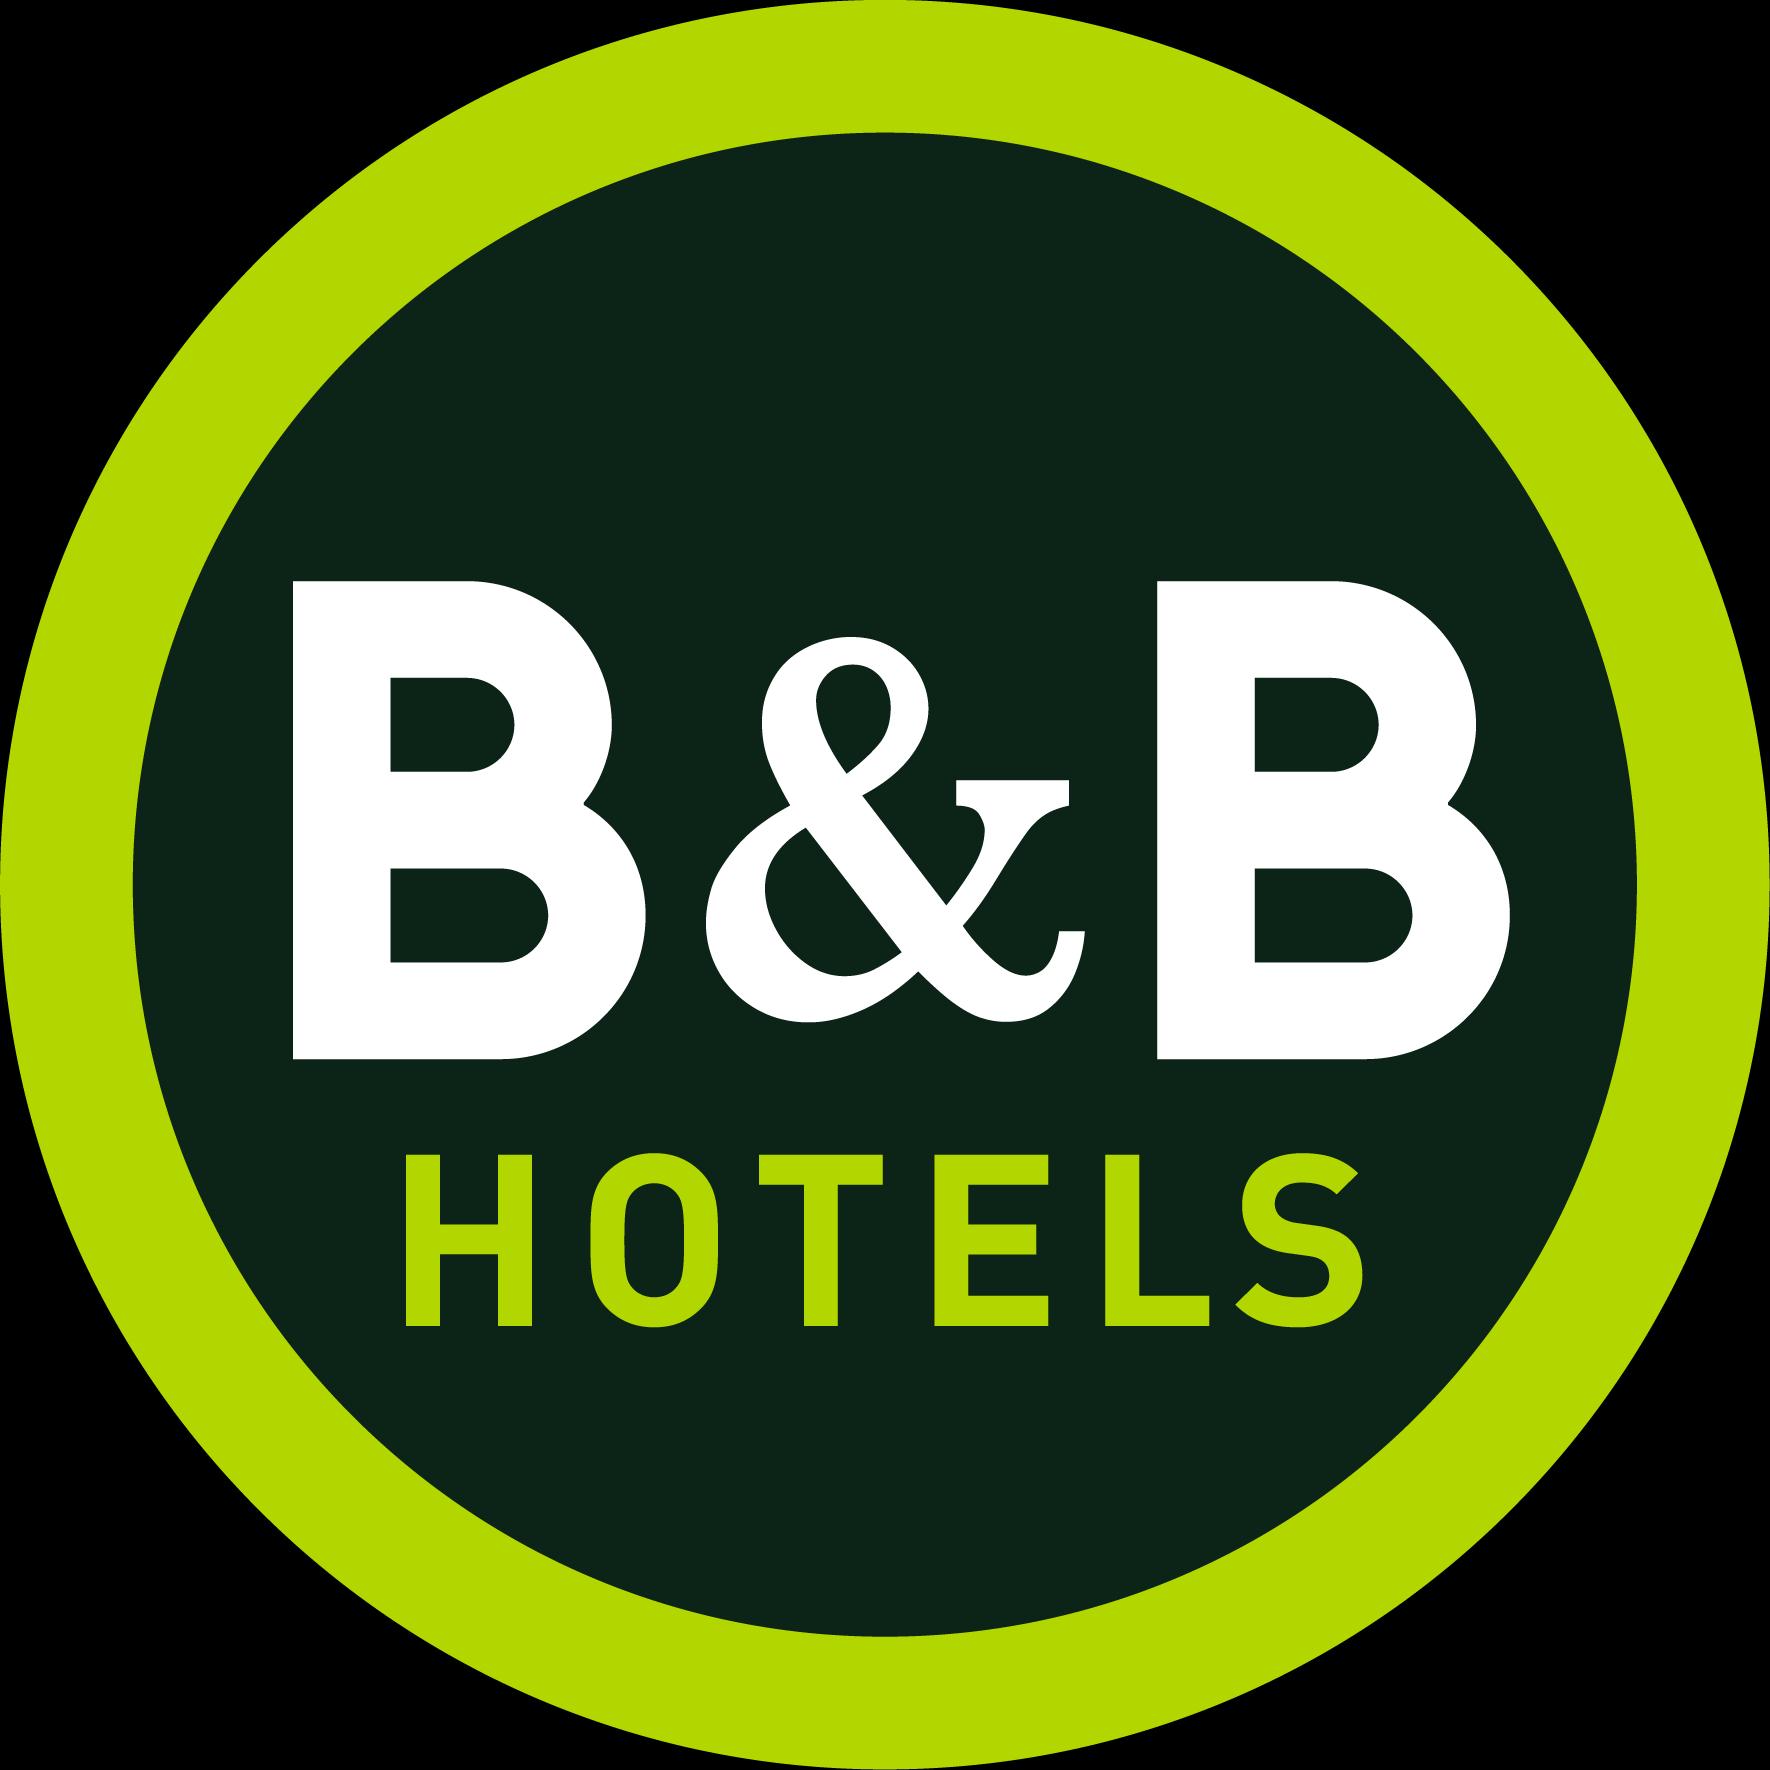 B&b Hotel Marne-la-vallée Bussy-saint-georges Bussy Saint Georges